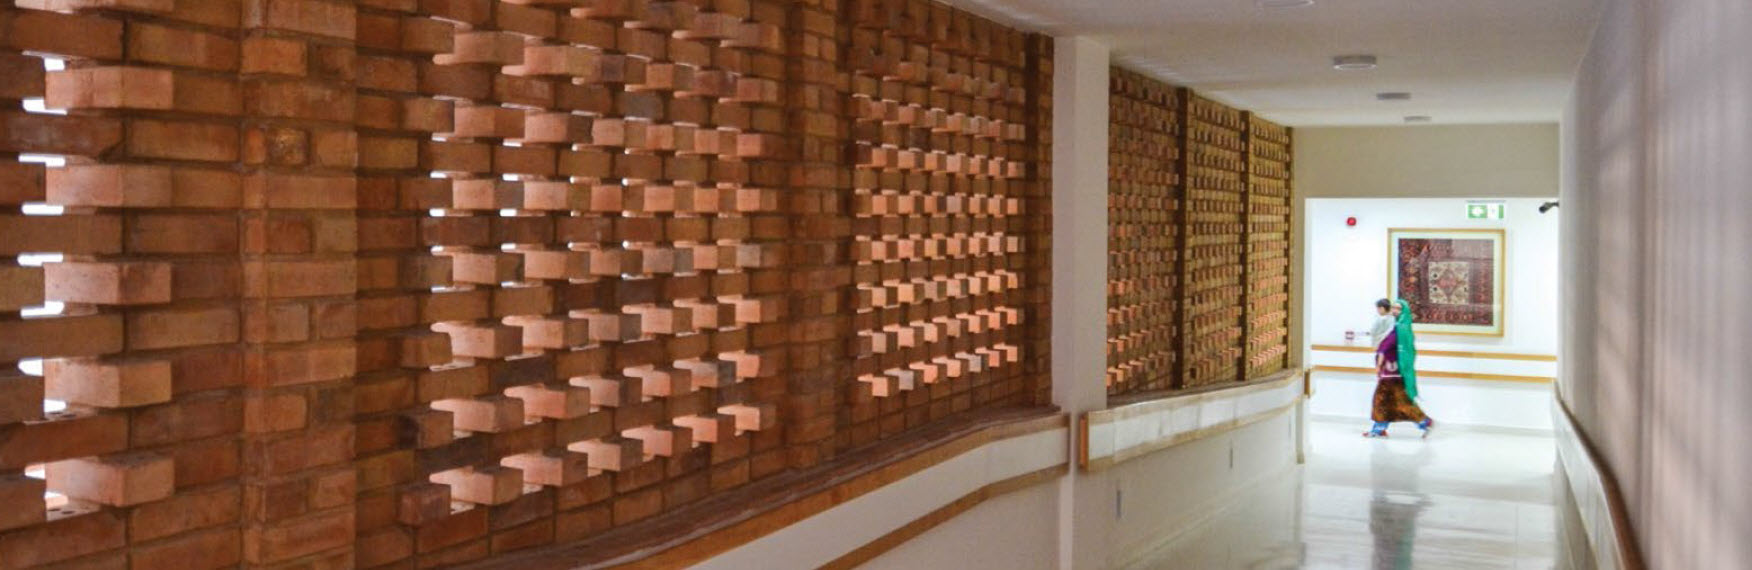 Interior, hallway with brick screen